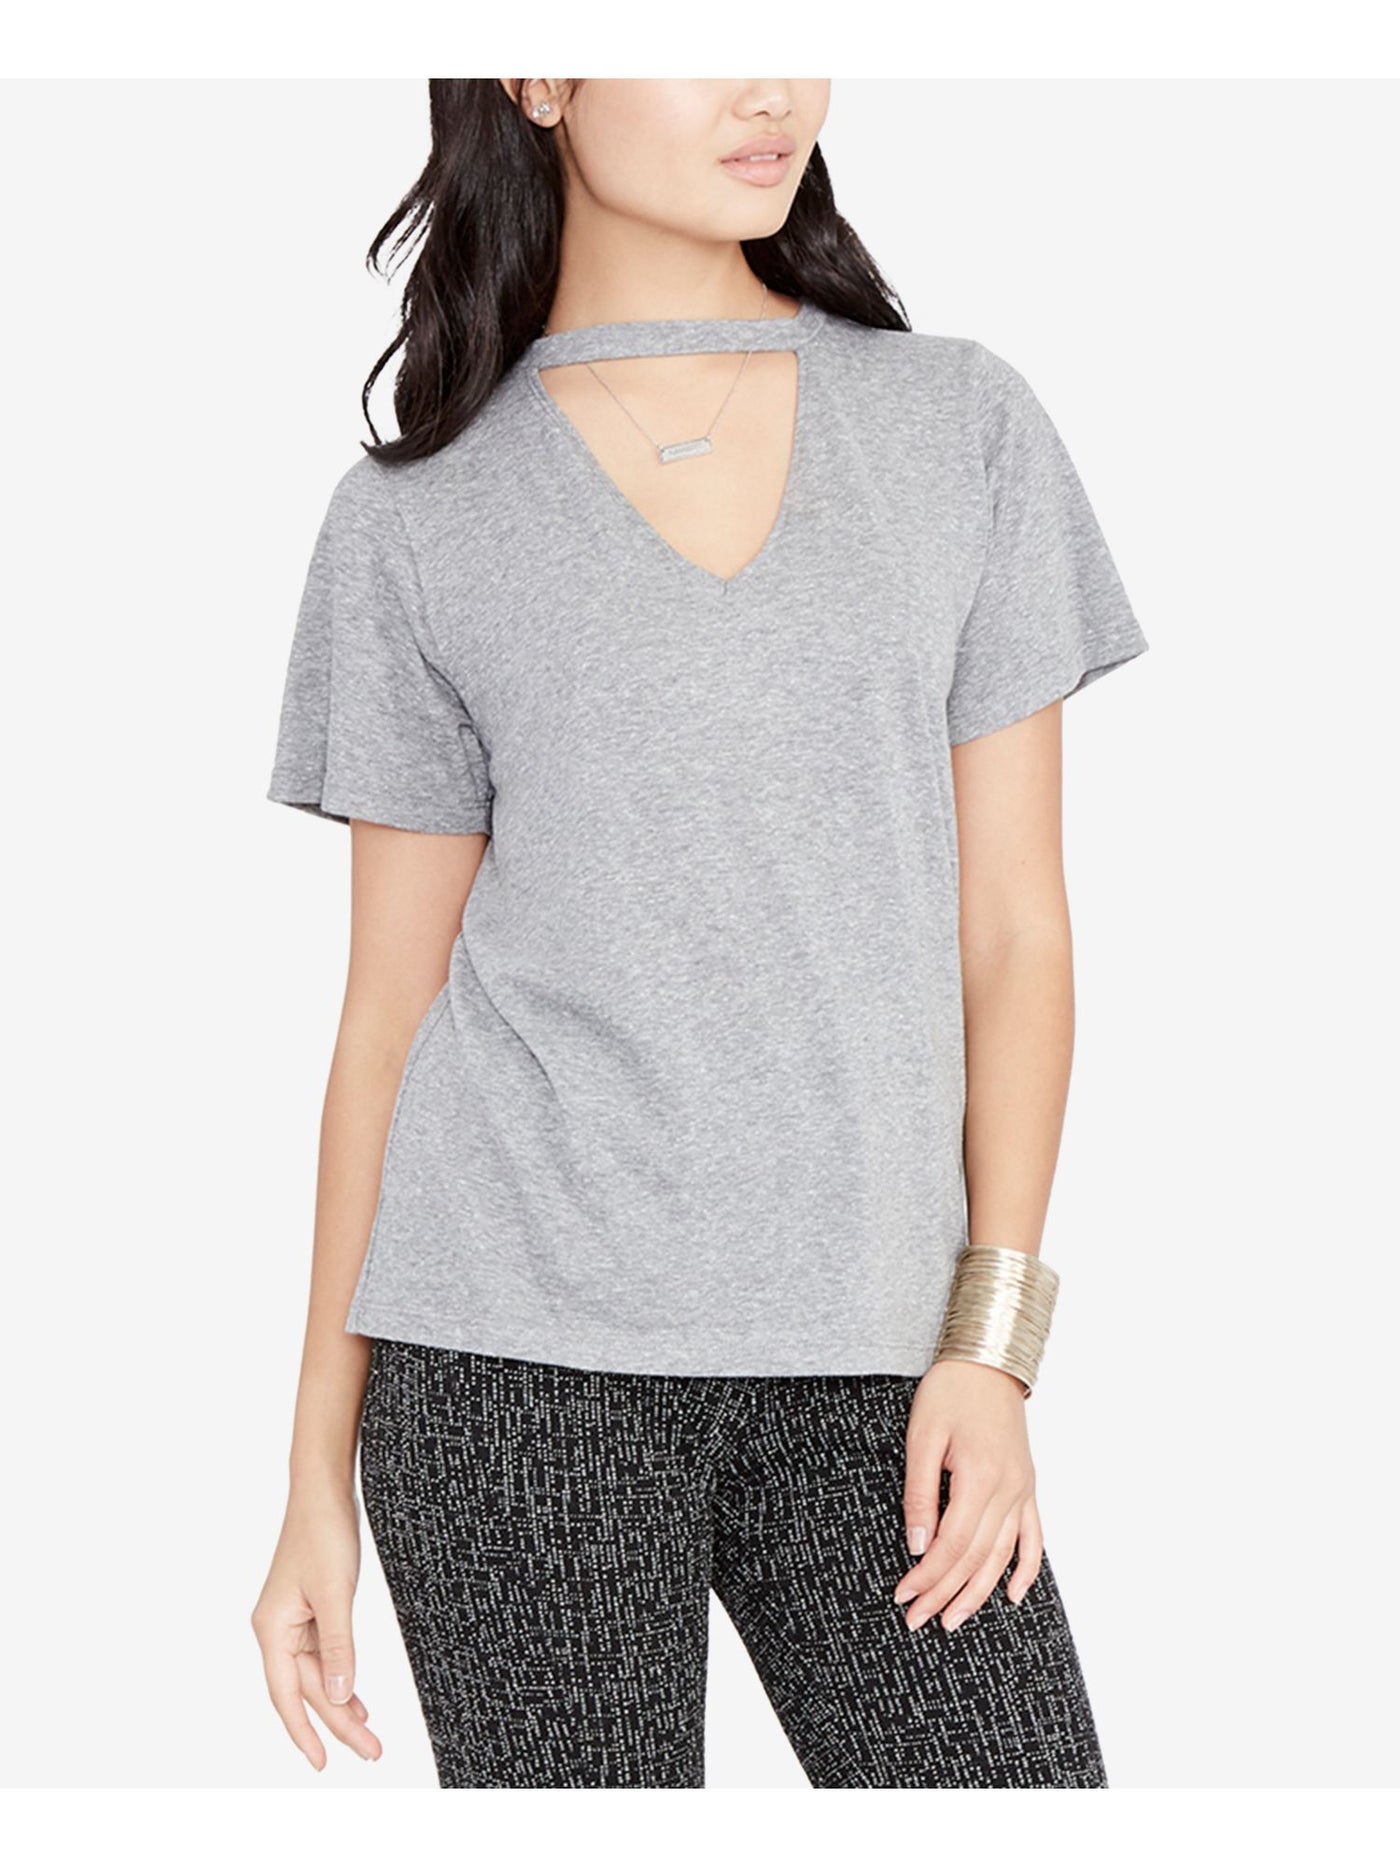 RACHEL ROY Womens Gray Short Sleeve V Neck T-Shirt Size: XS